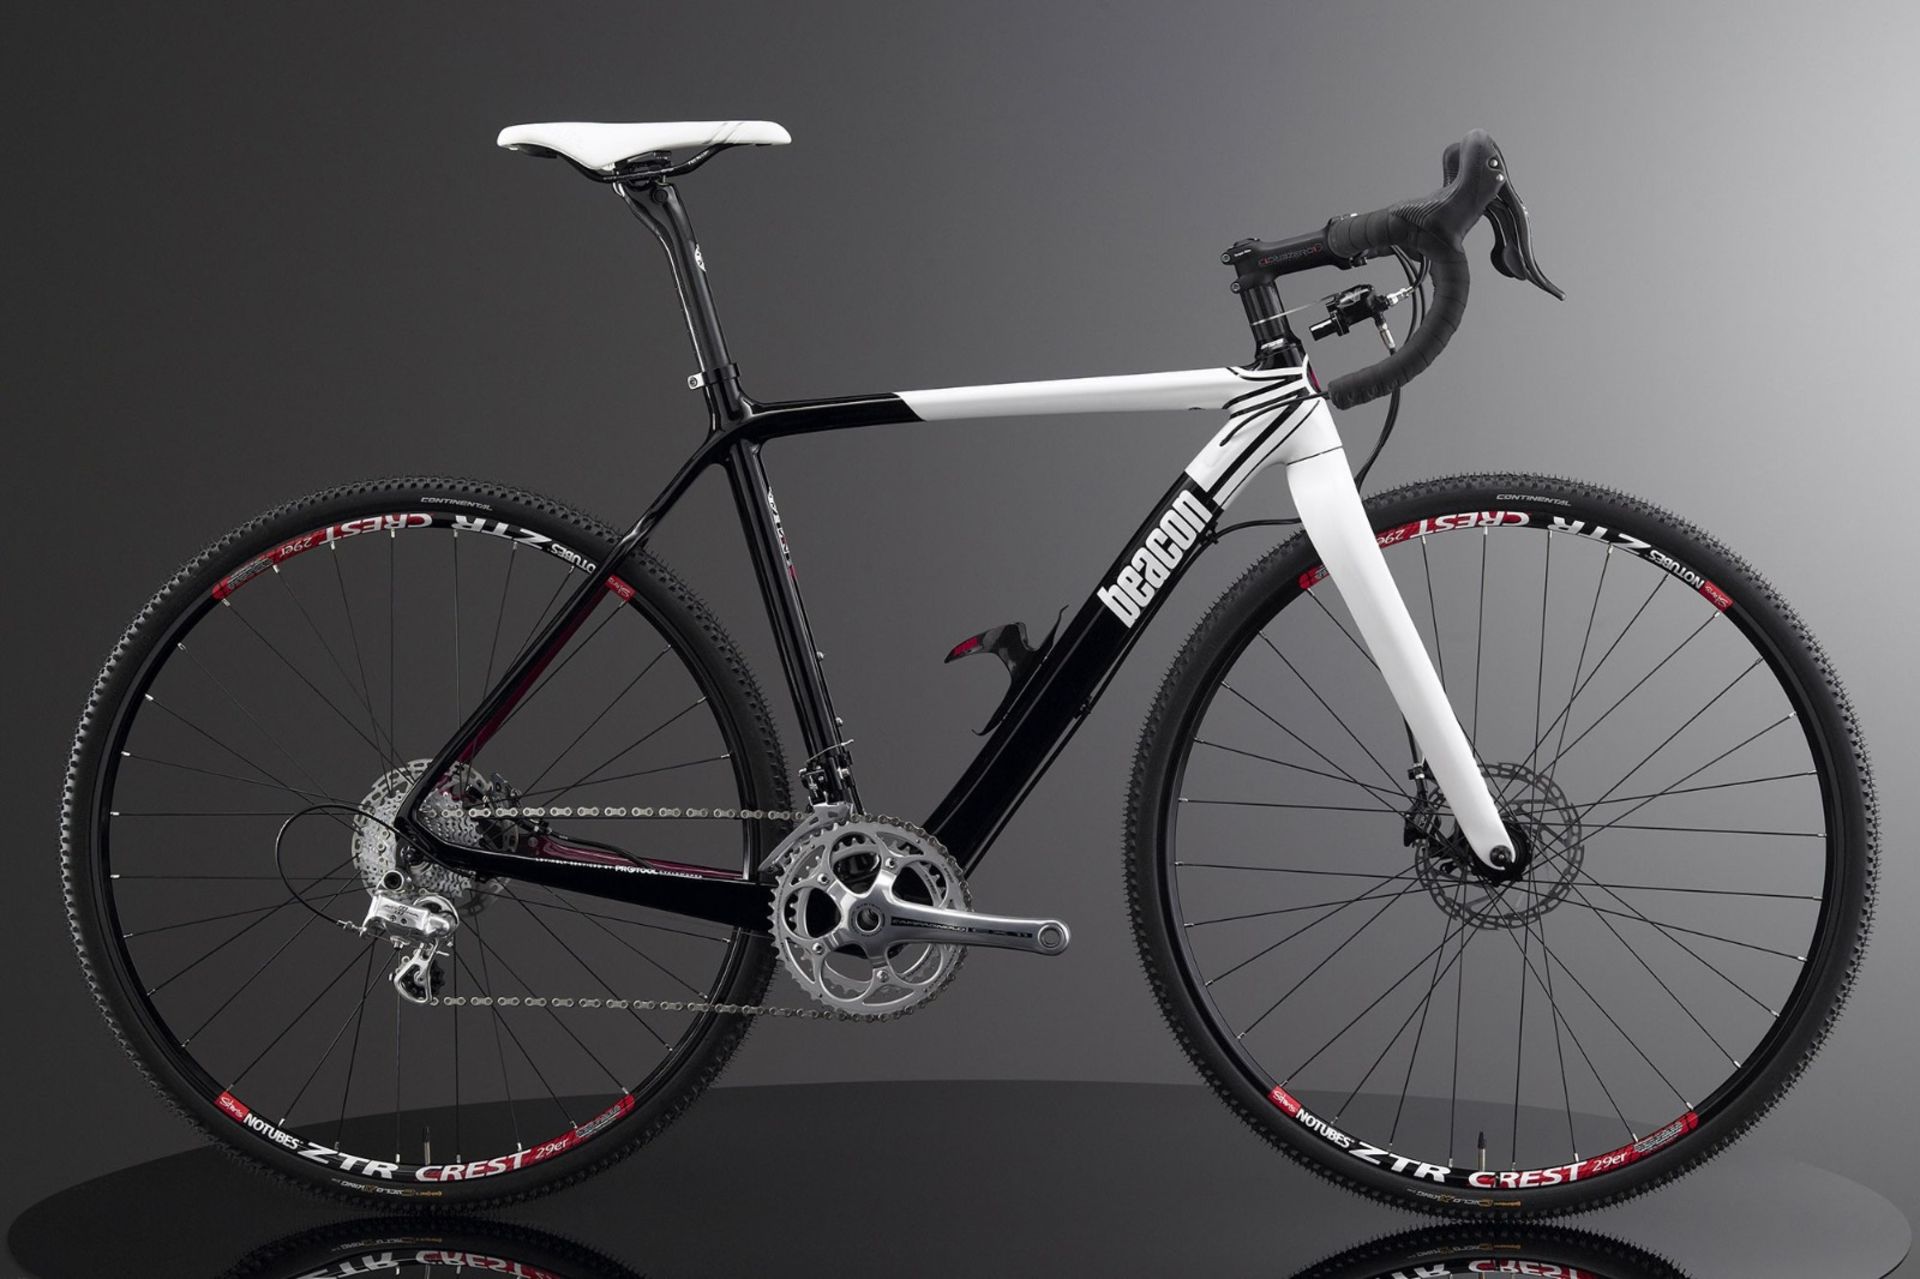 1 x Beacon Model BF-45, Size 580, Carbon Fibre Bike Frame in Black & White. - Image 2 of 3